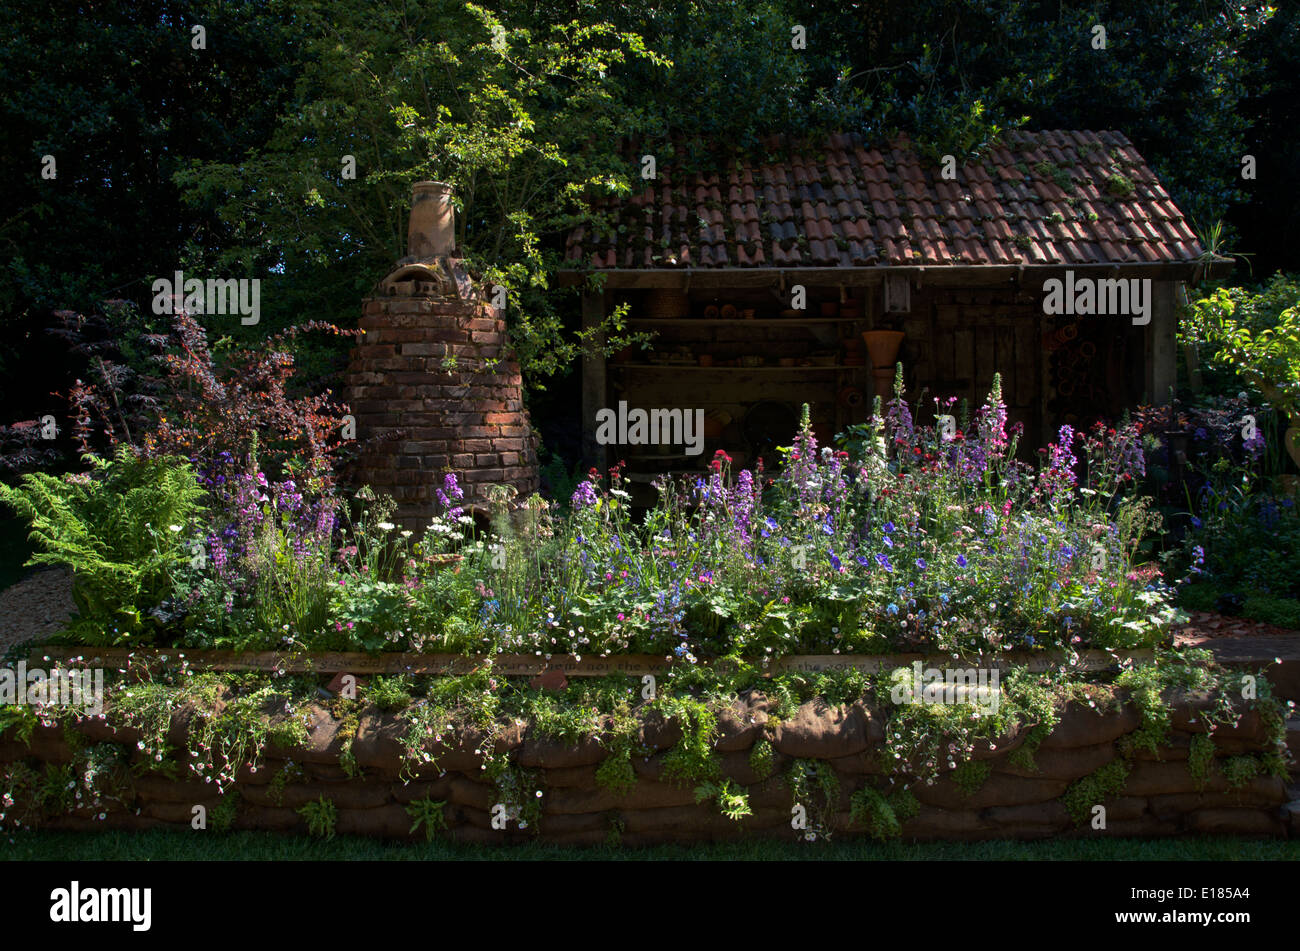 The DialAFlight Potter's Garden at RHS Chelsea Flower Show 2014. Stock Photo